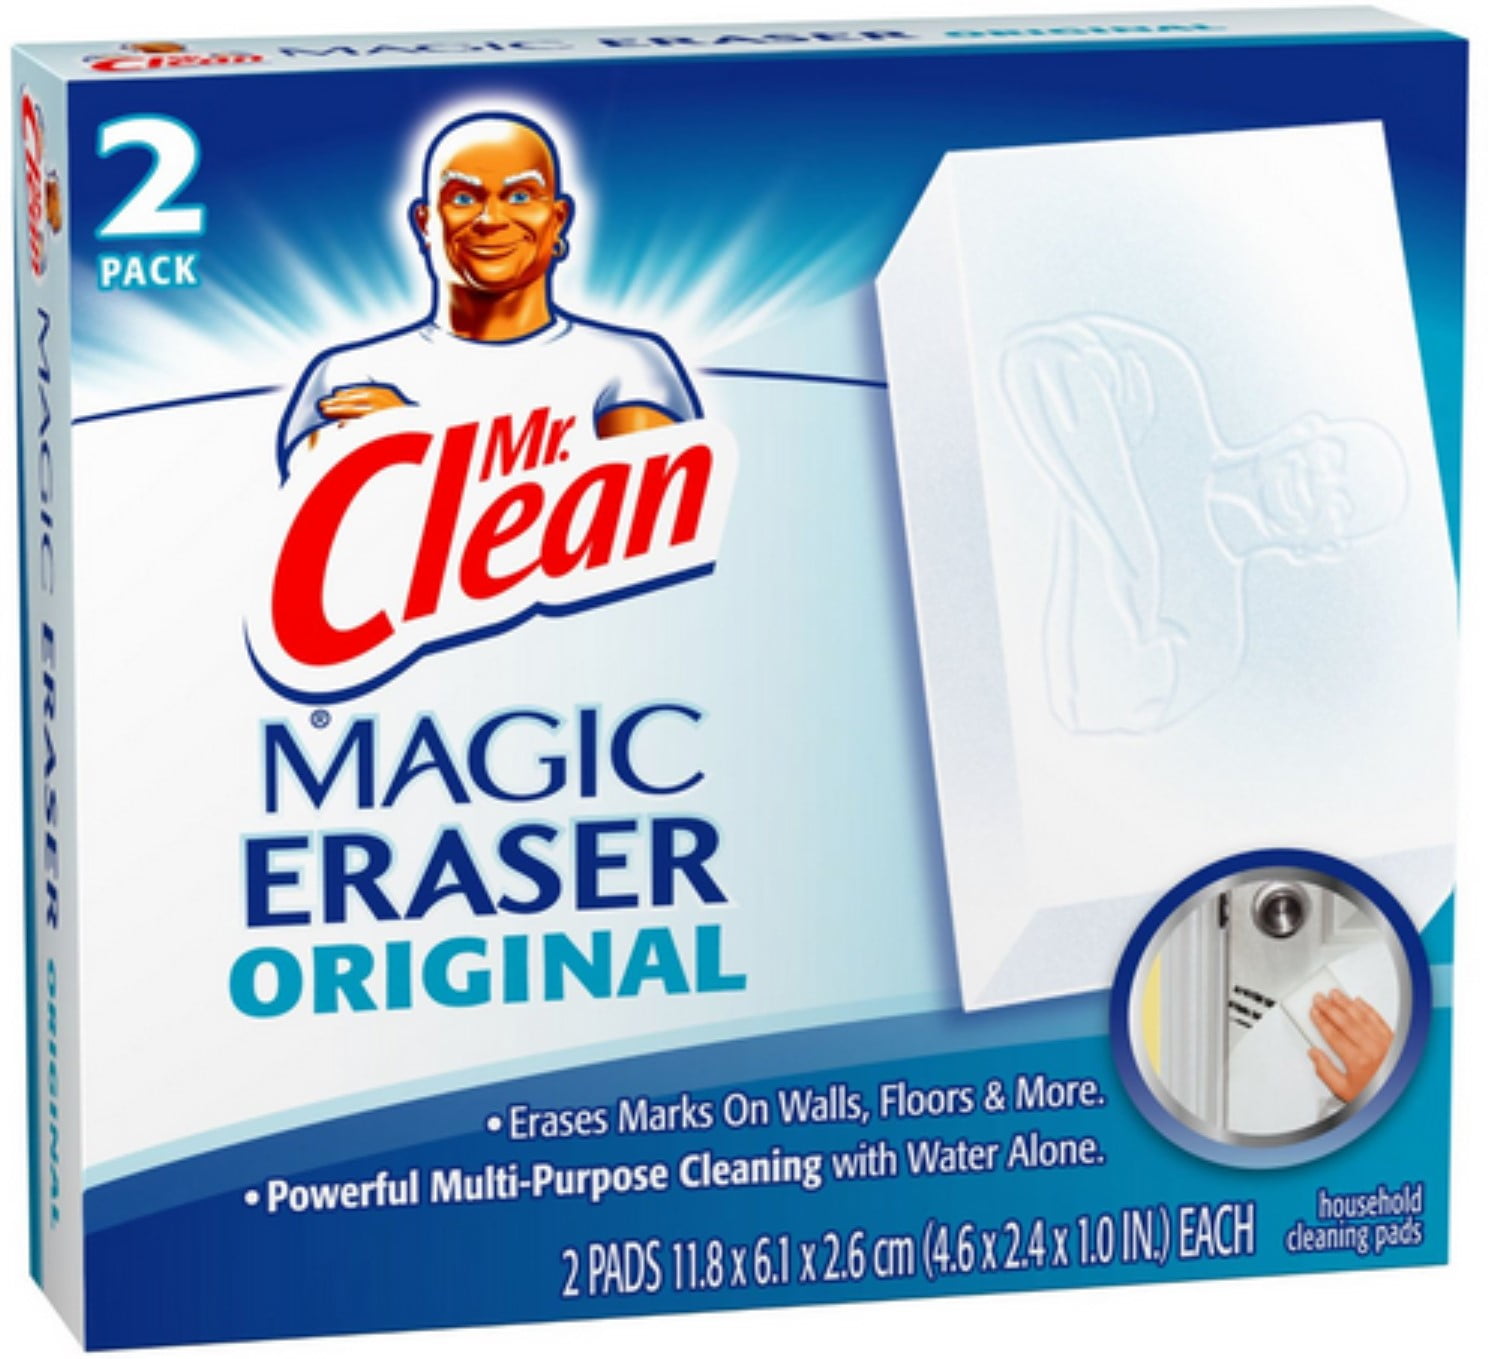 2 Mr Clean Magic Eraser Original Cleaning Sponges 3 ea 6 PADS total Lot of 